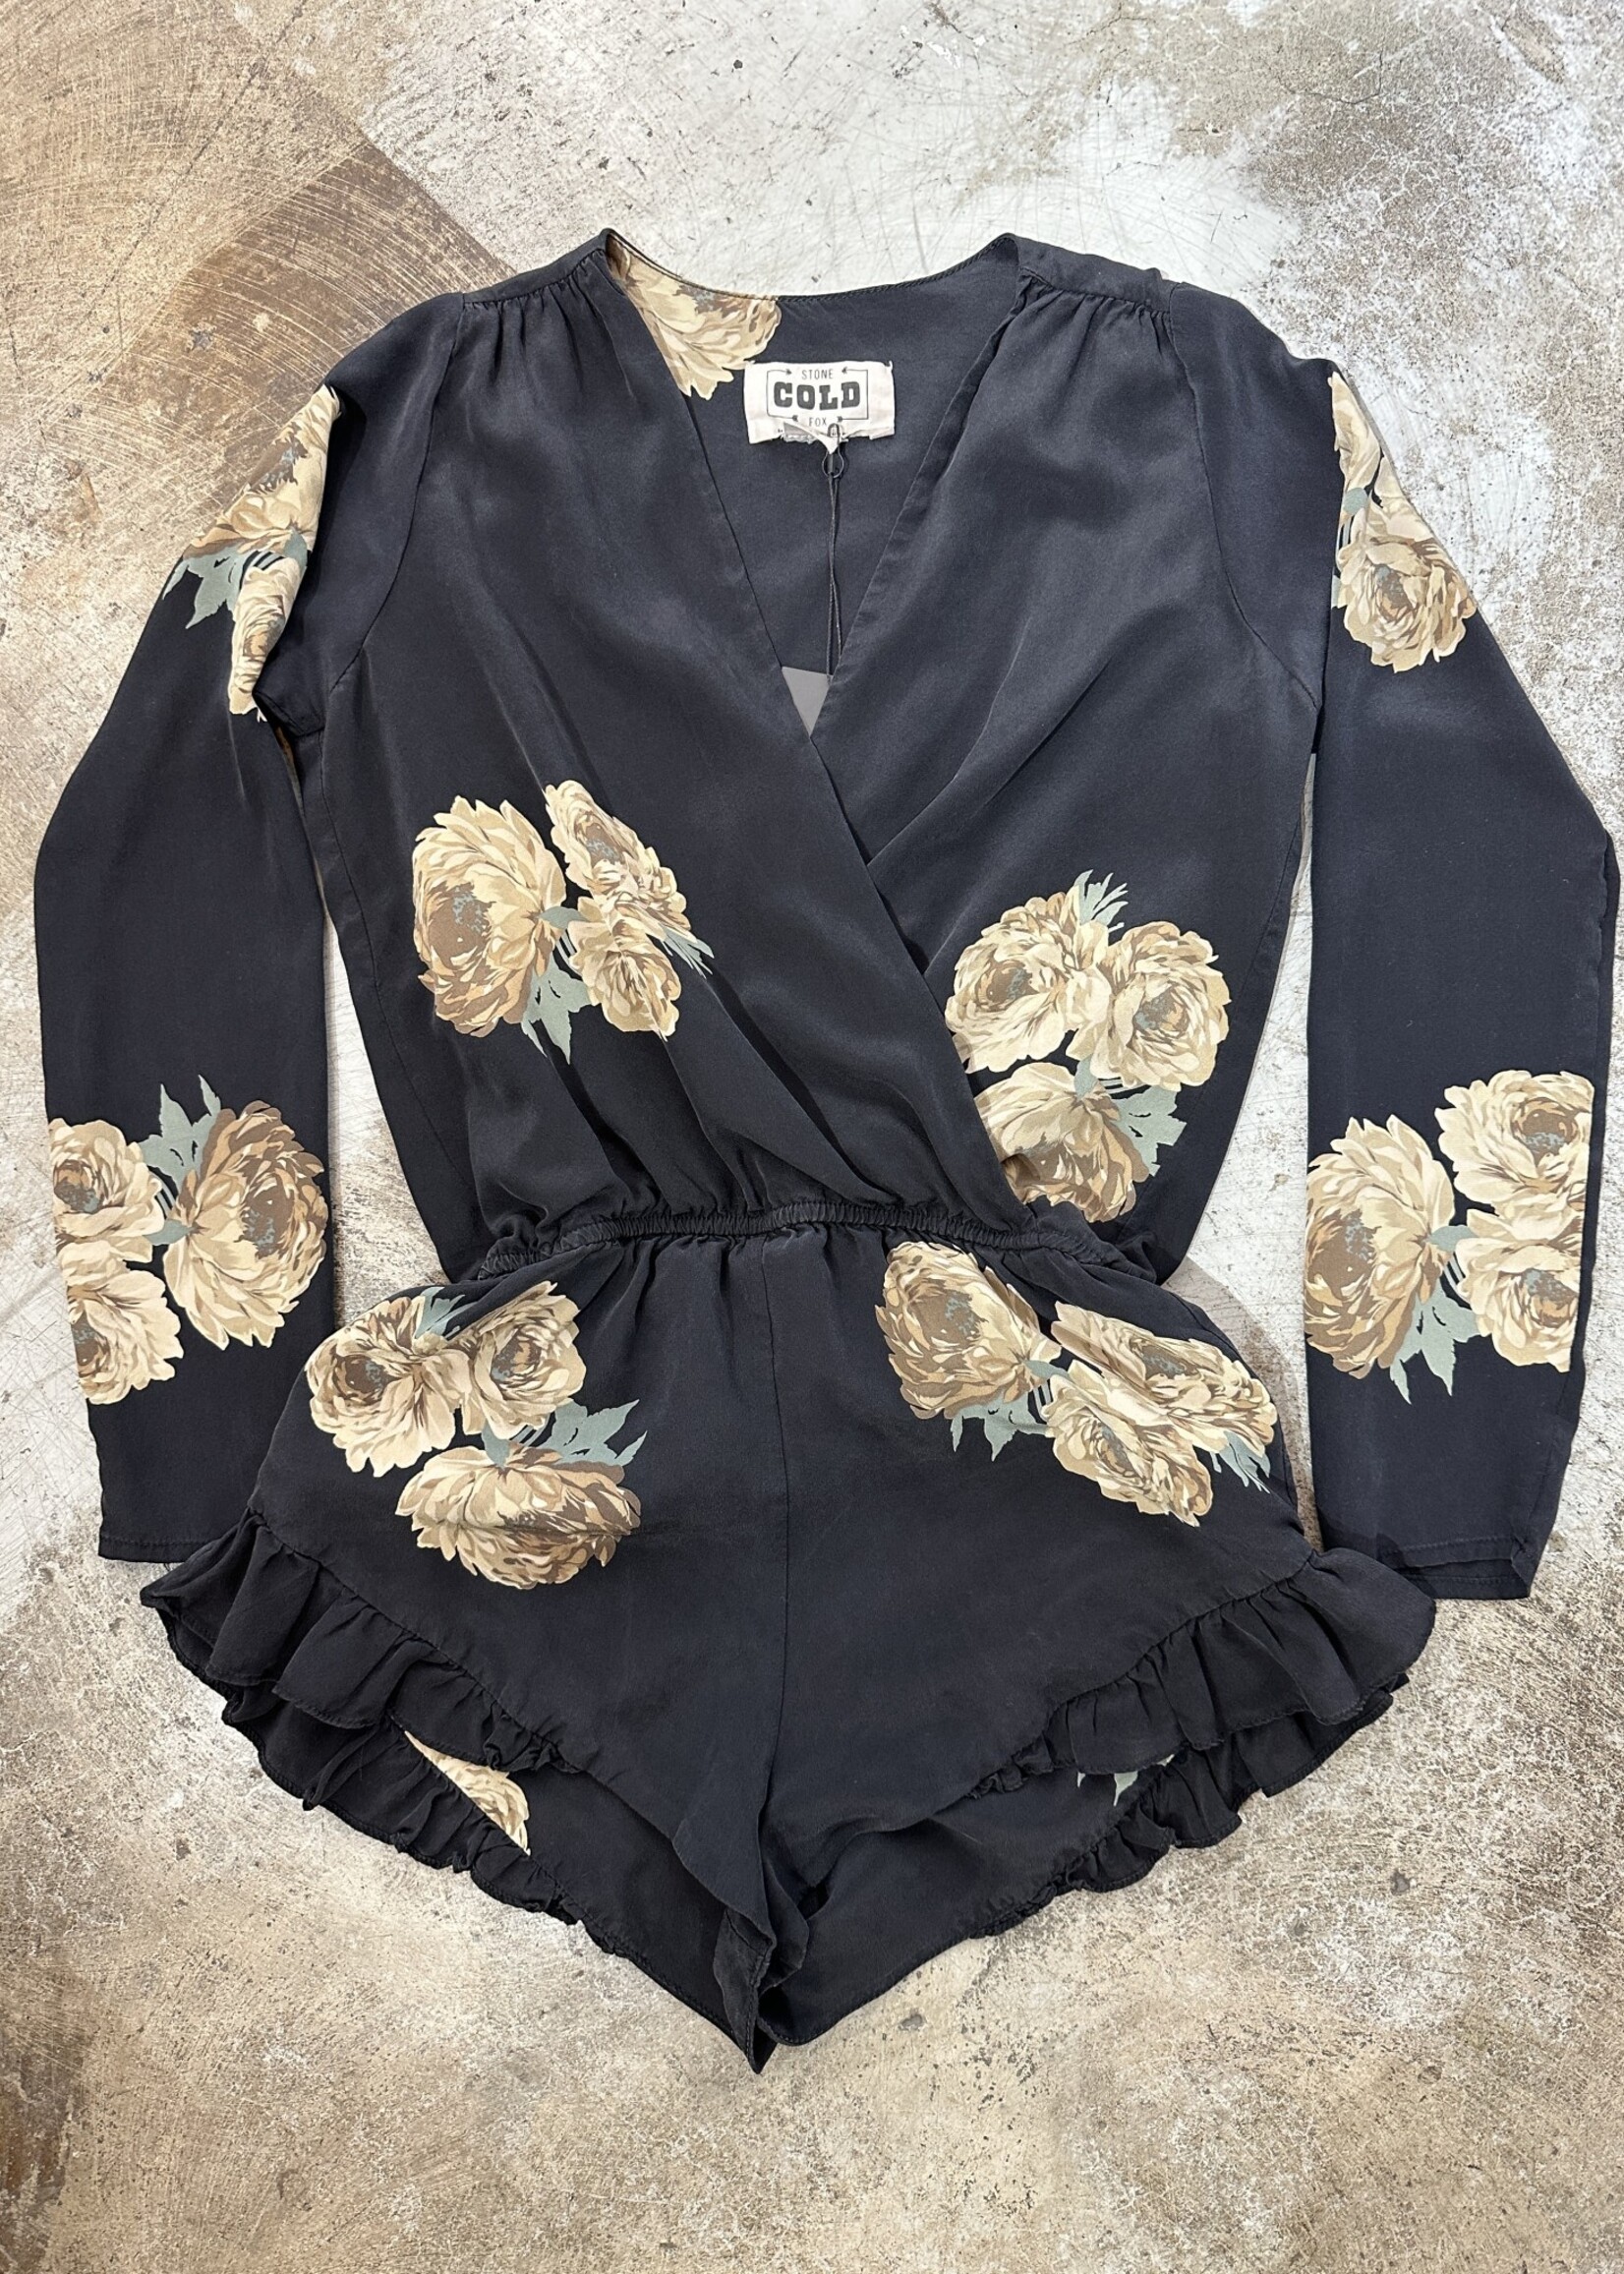 Stone Cold Fox Black Floral Romper XS/S (Retail: $200+)